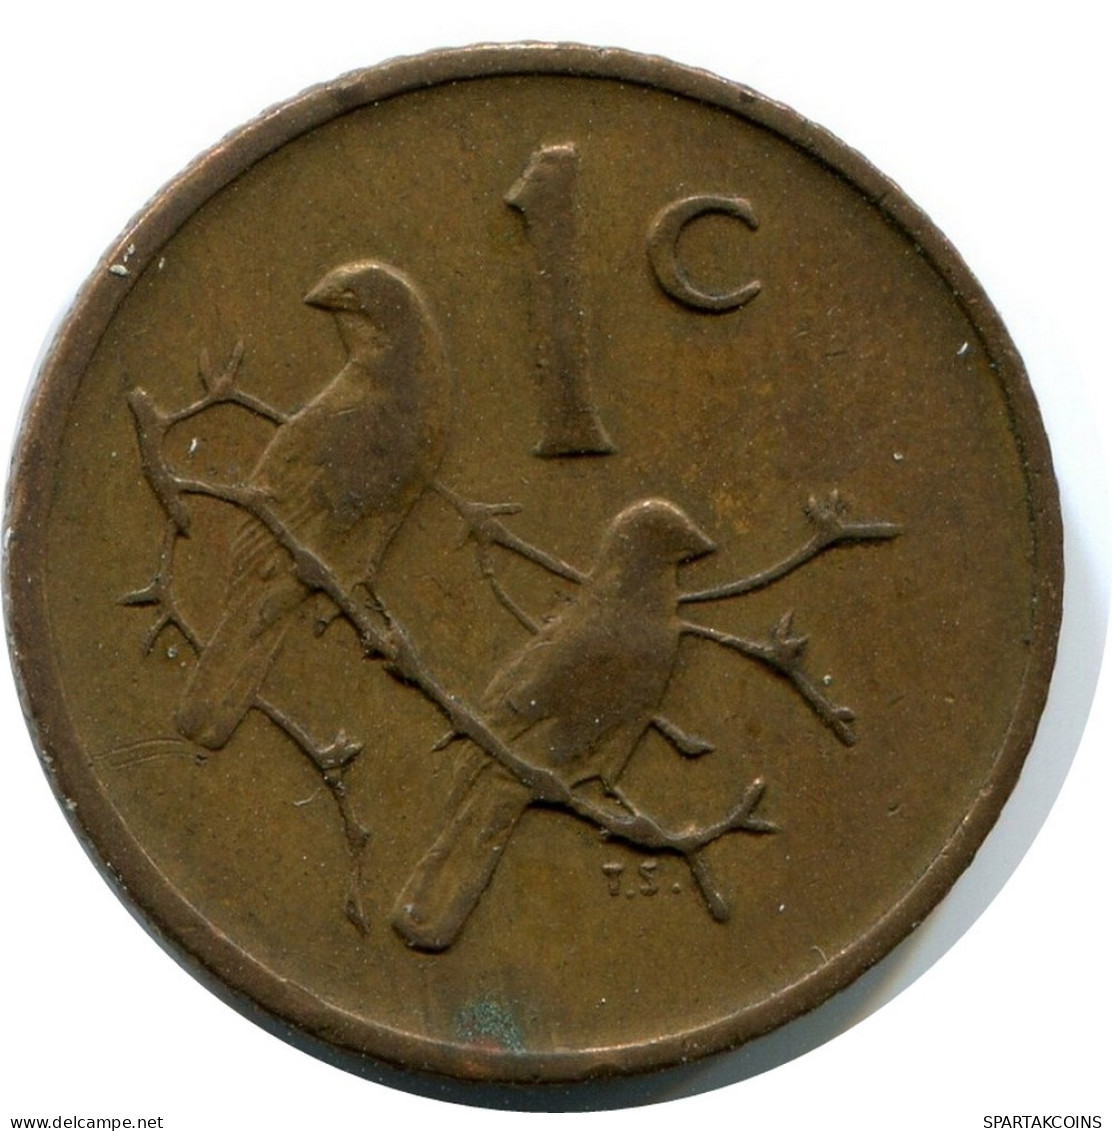 1 CENT 1976 SUDAFRICA SOUTH AFRICA Moneda #AX173.E.A - Afrique Du Sud